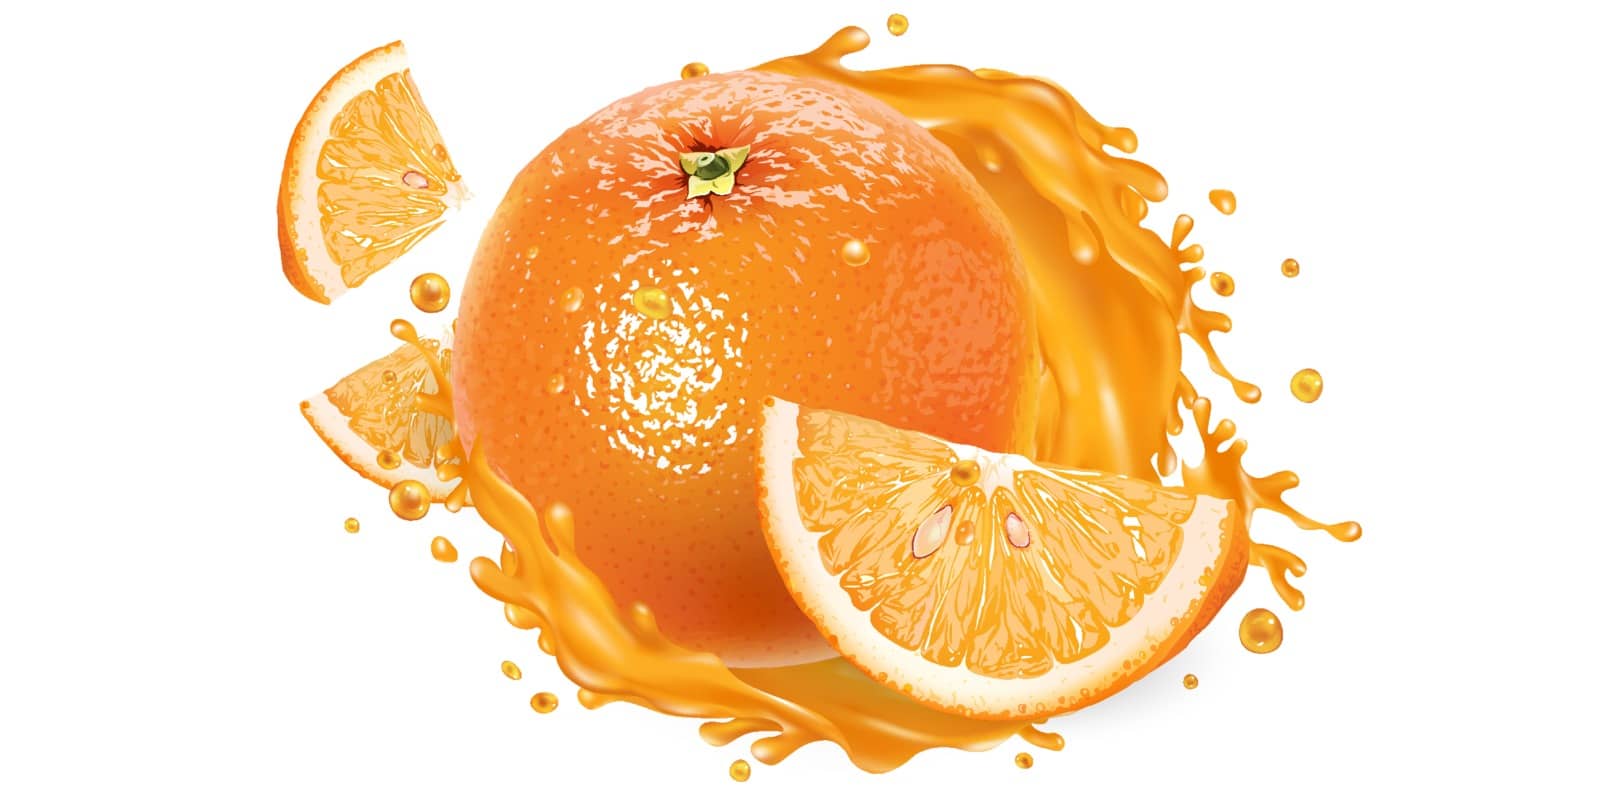 Fresh orange and a splash of fruit juice on a white background. Realistic vector illustration.